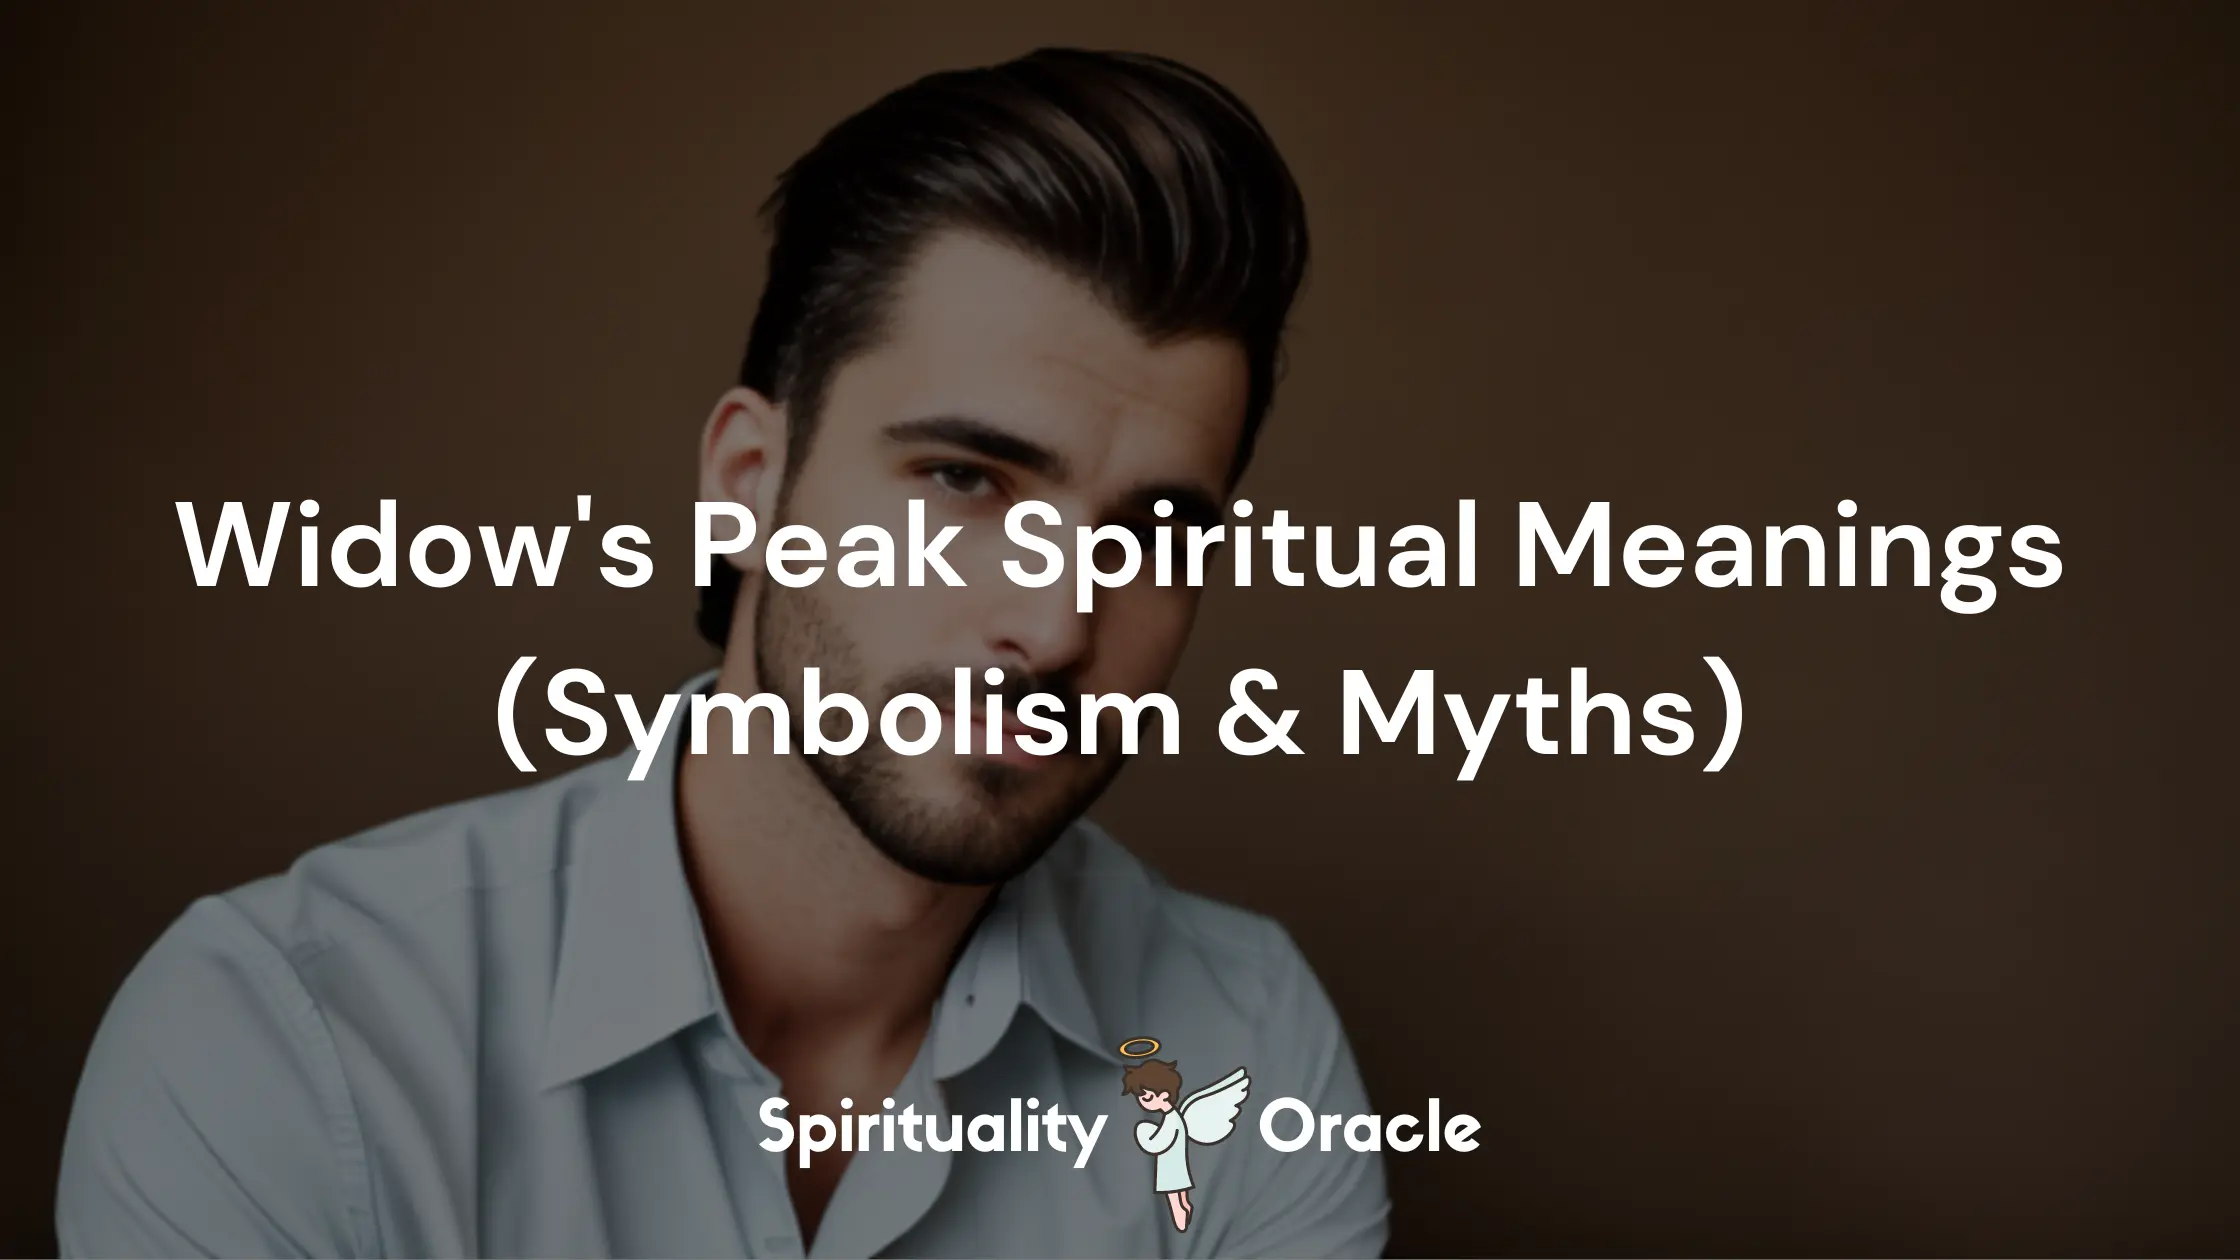 Widow's Peak Spiritual Meanings (Symbolism & Myths)